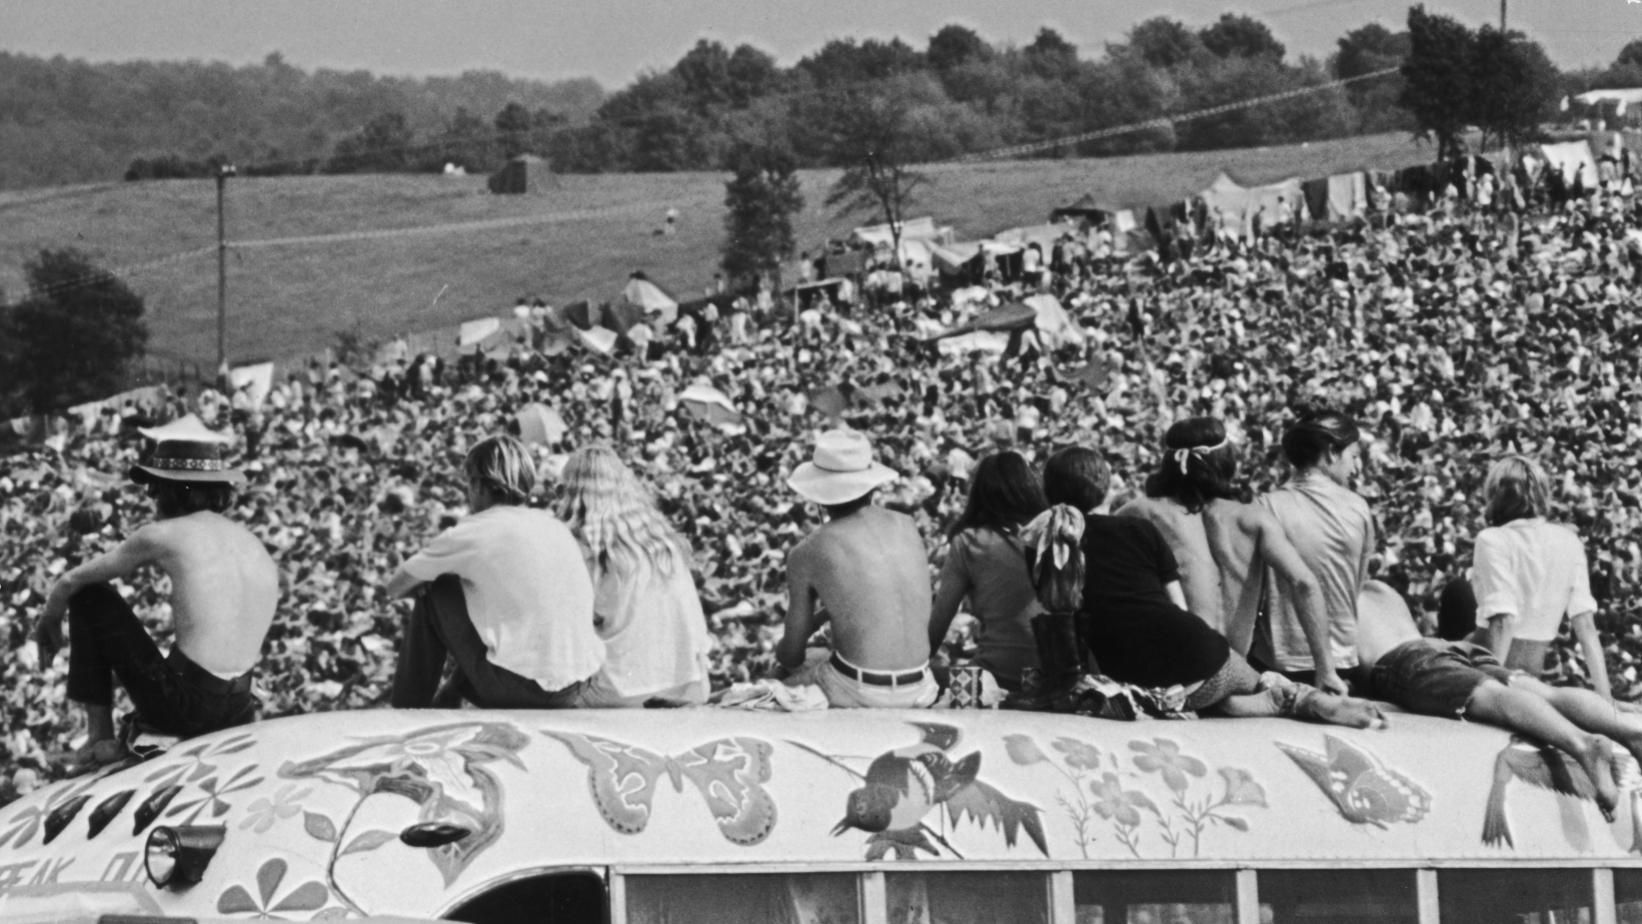 Woodstock sta per tornare